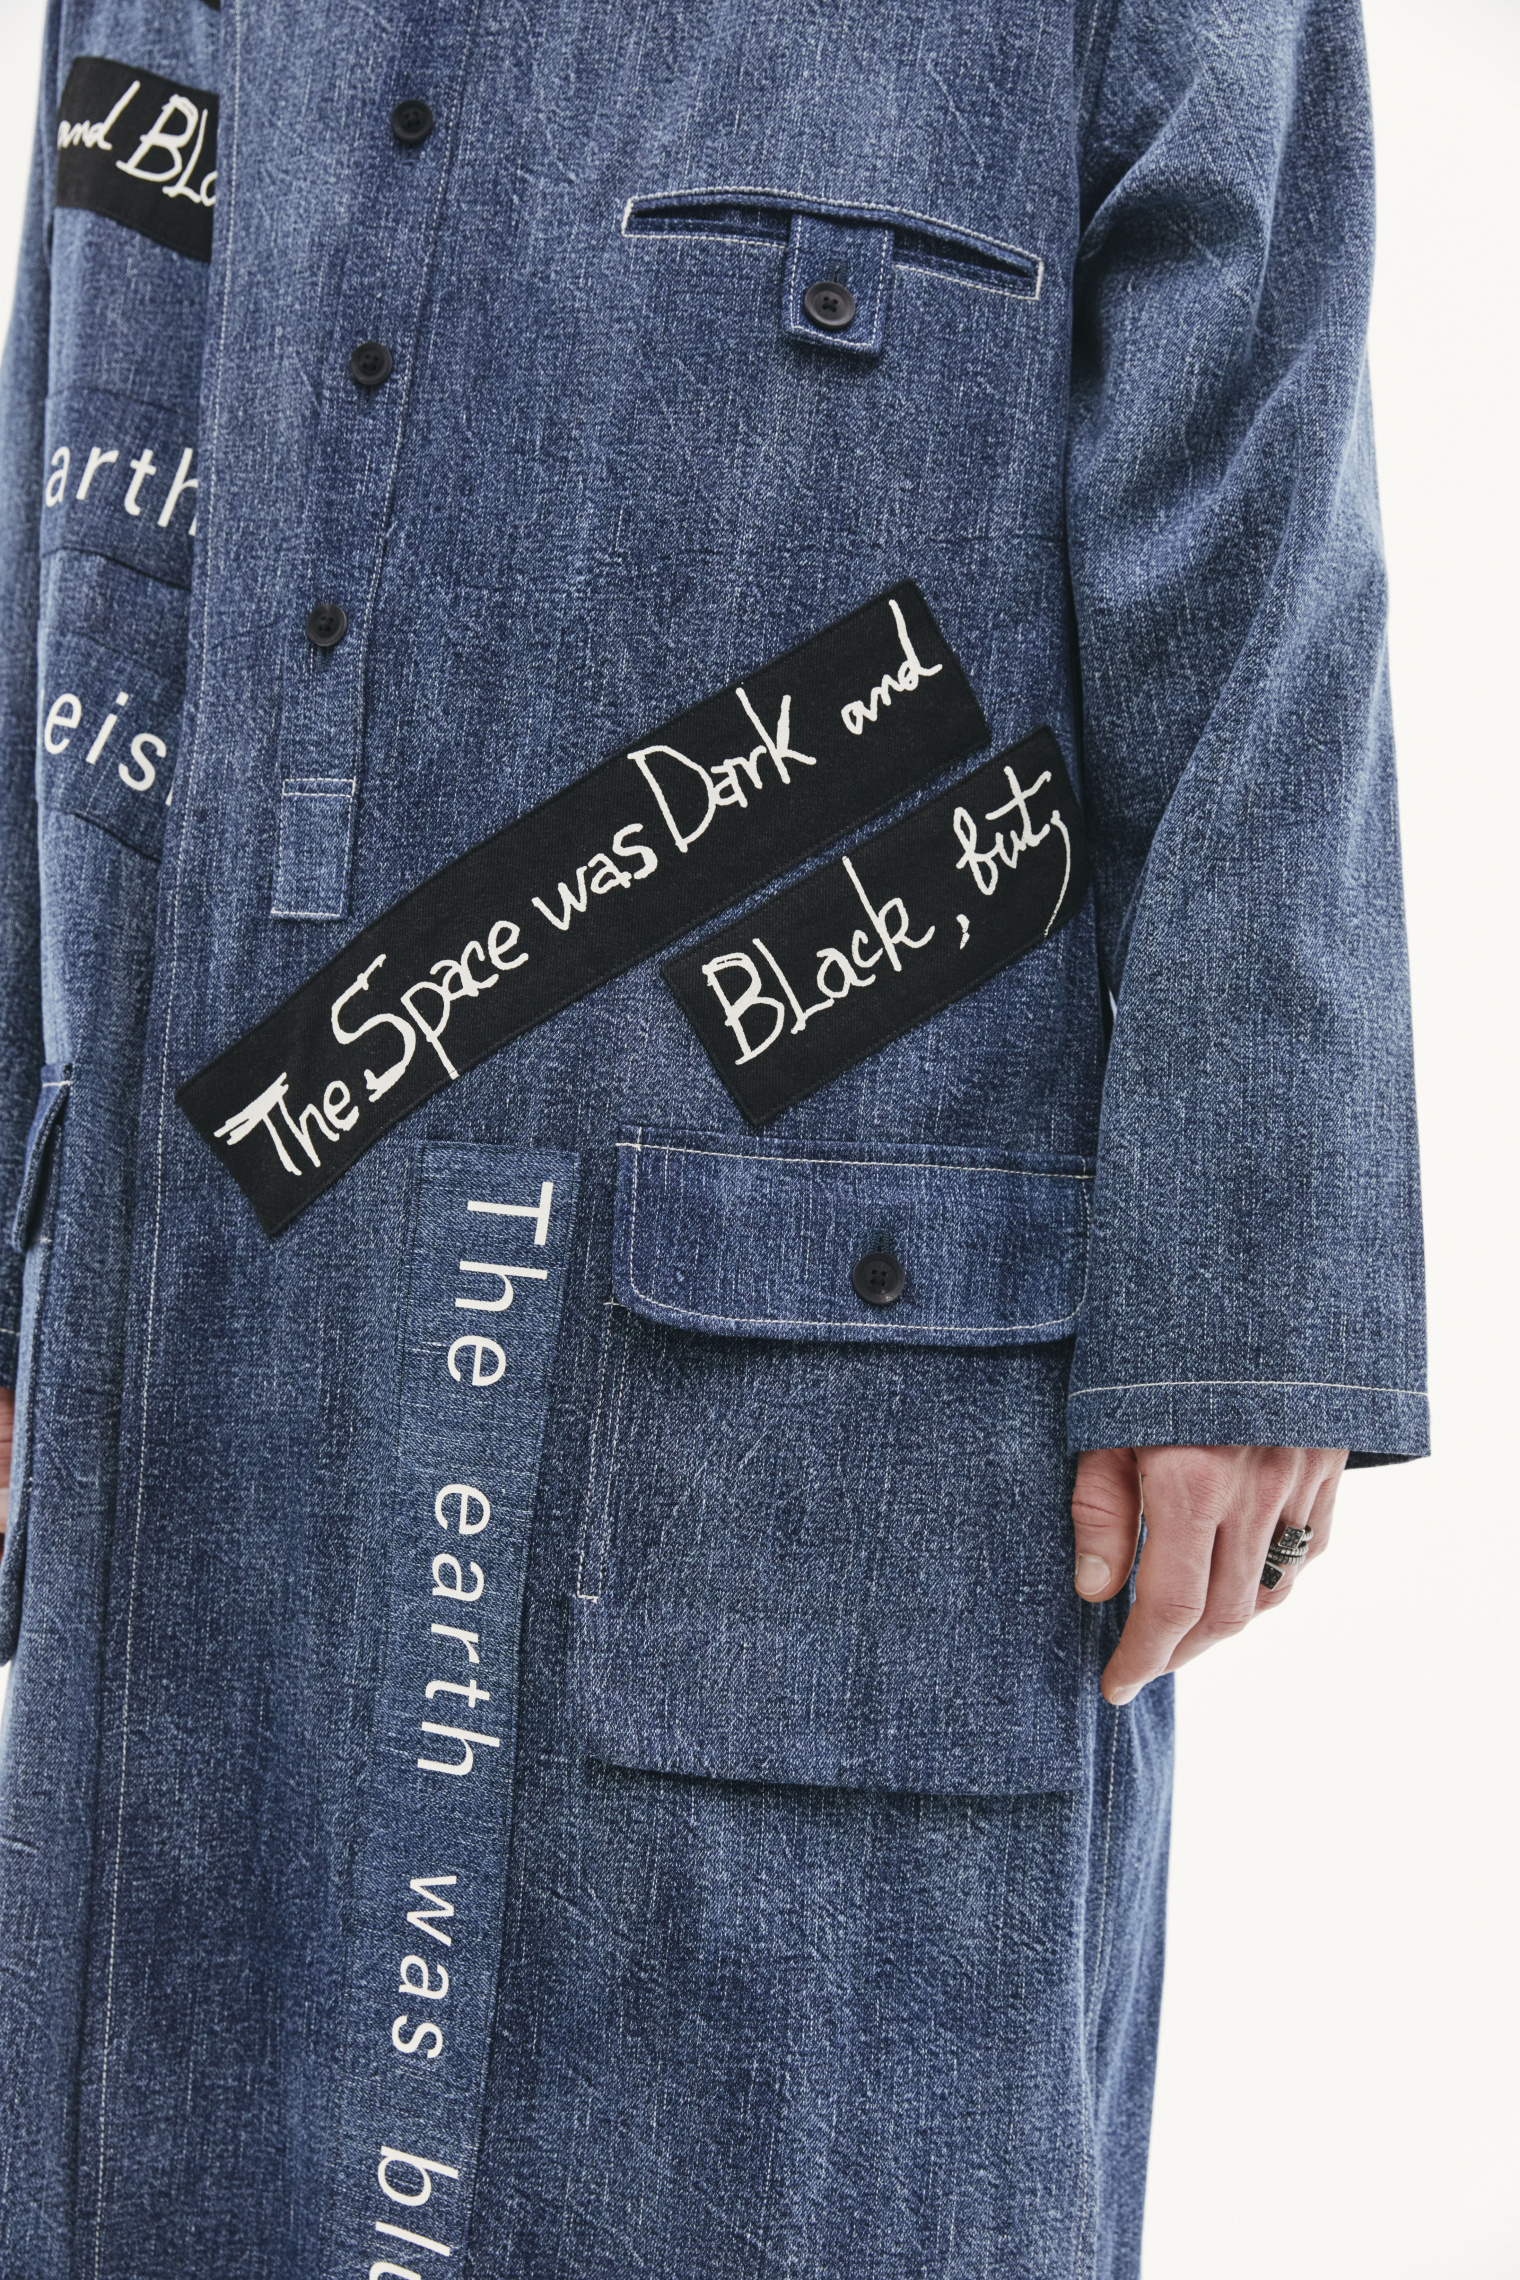 Yohji Yamamoto Blue Denim Coat